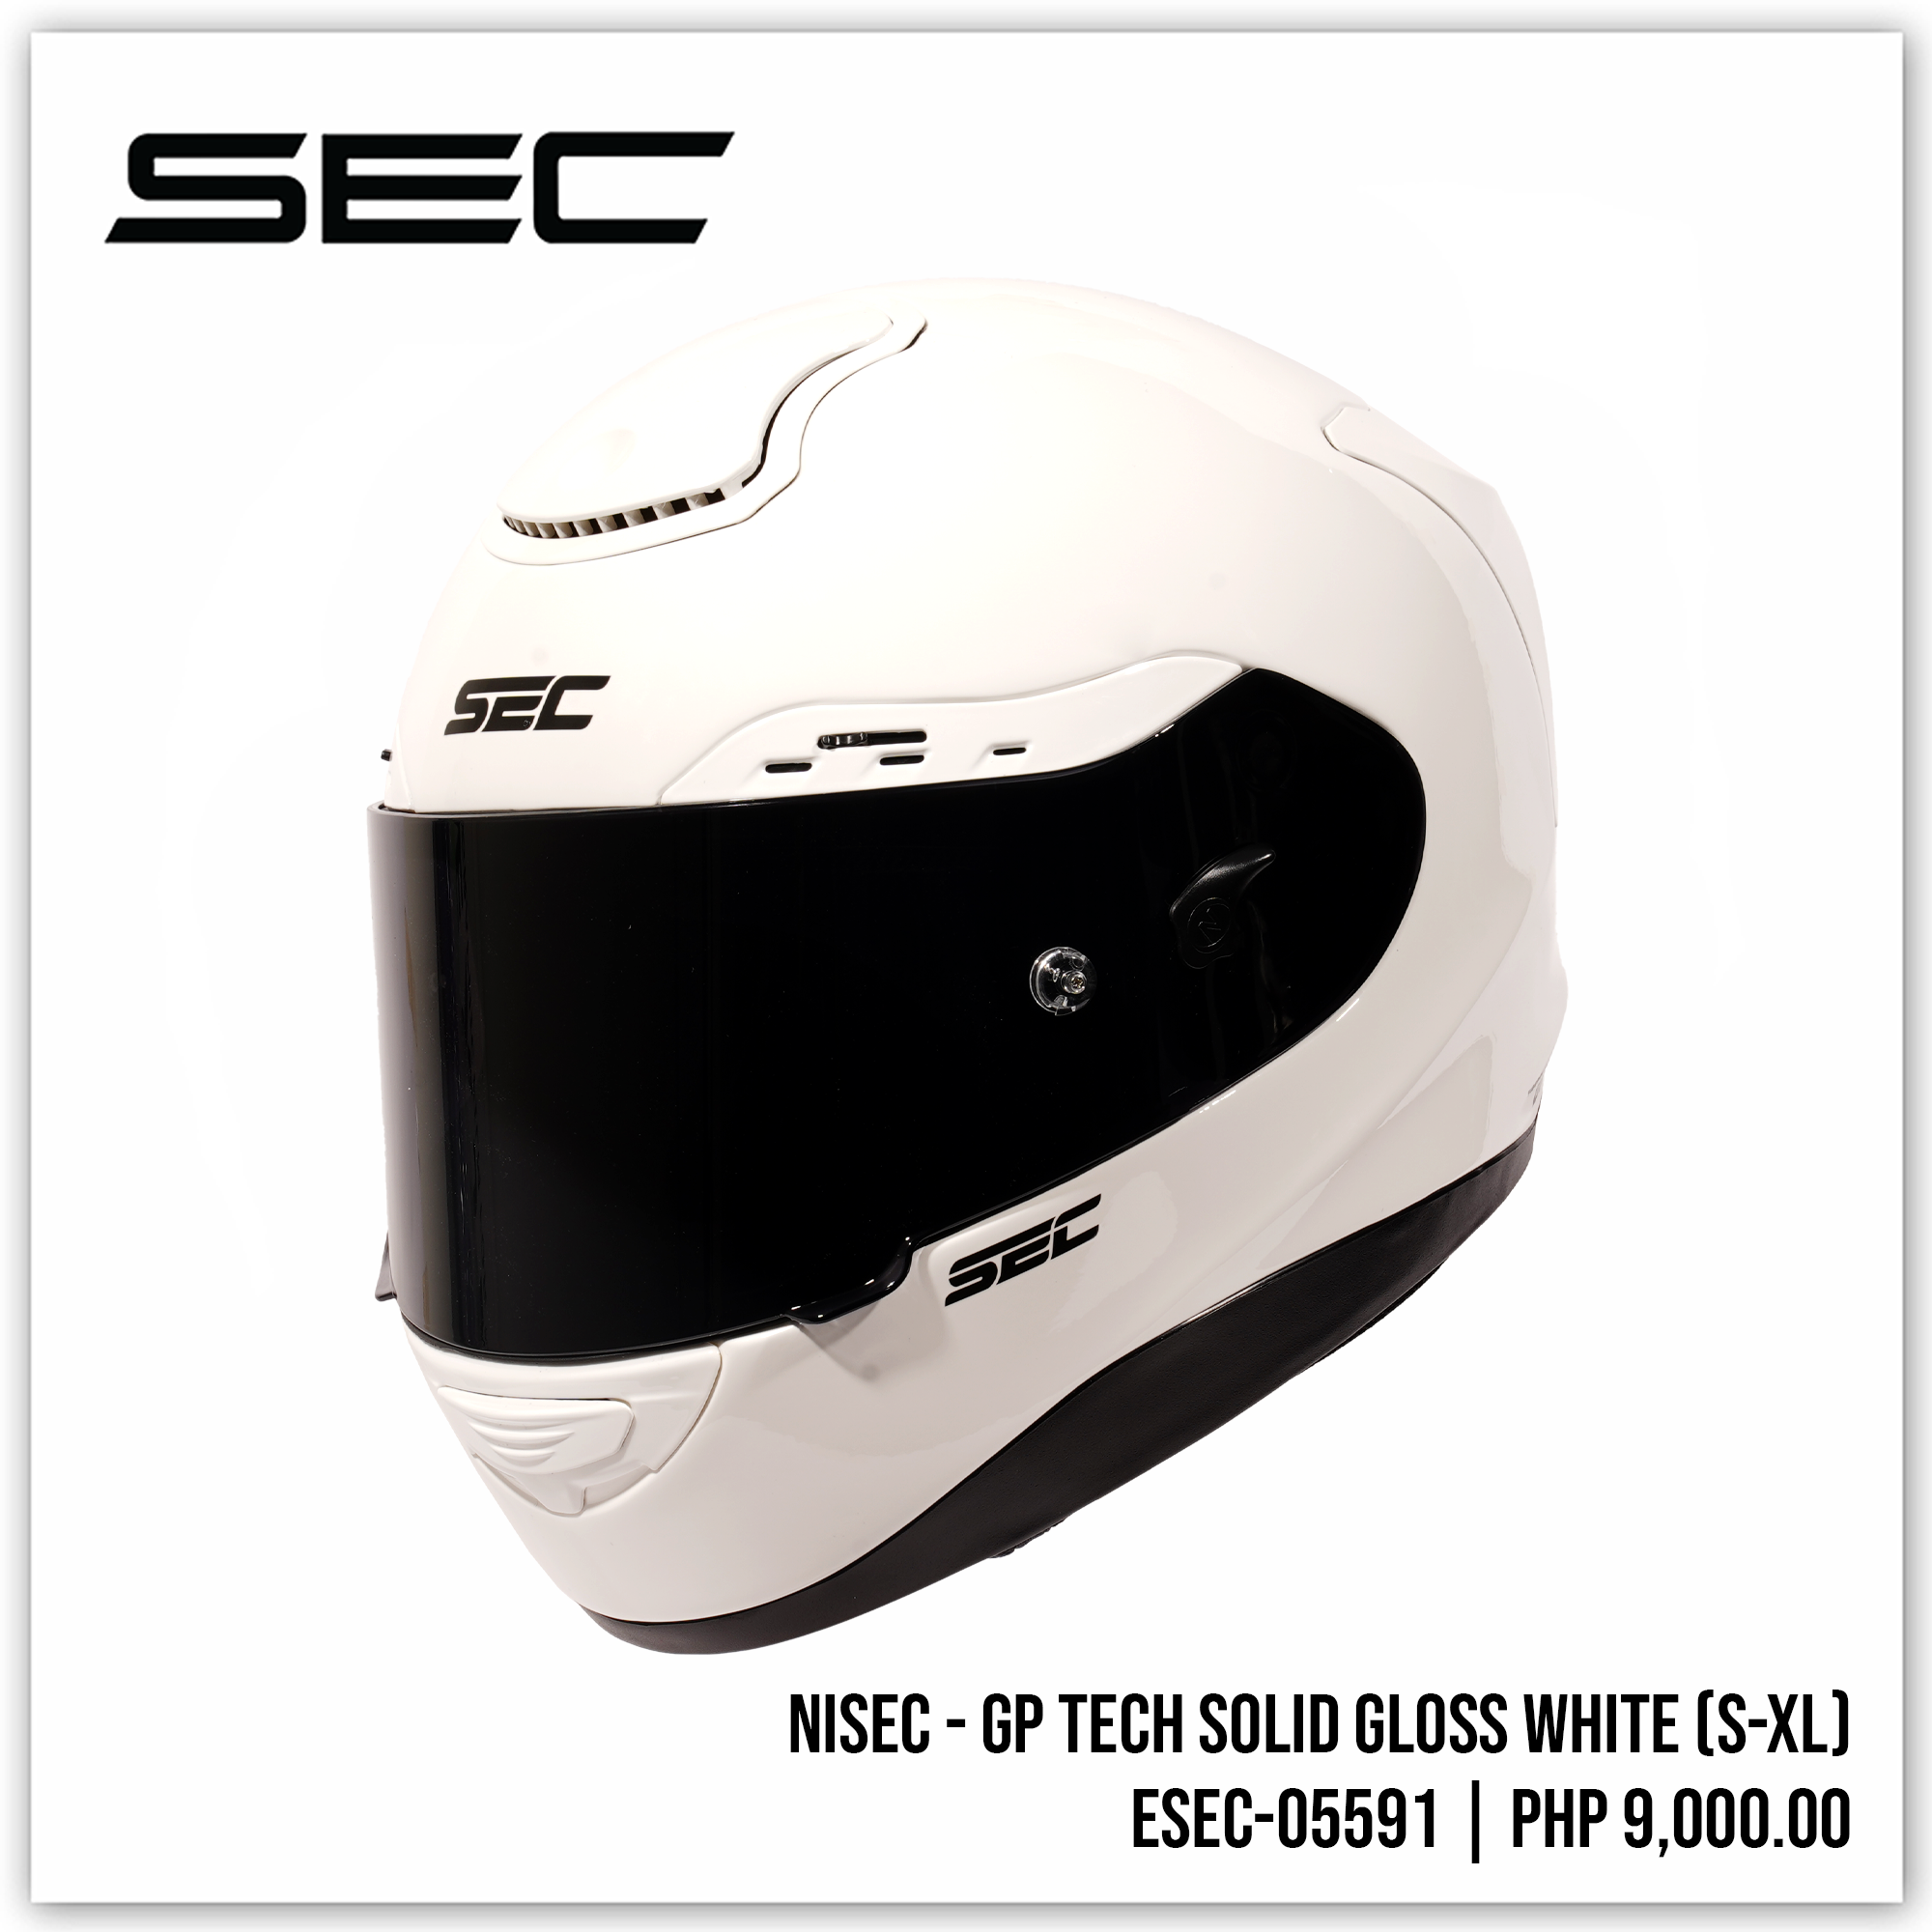 NISEC - GP-TECH Solid Gloss White